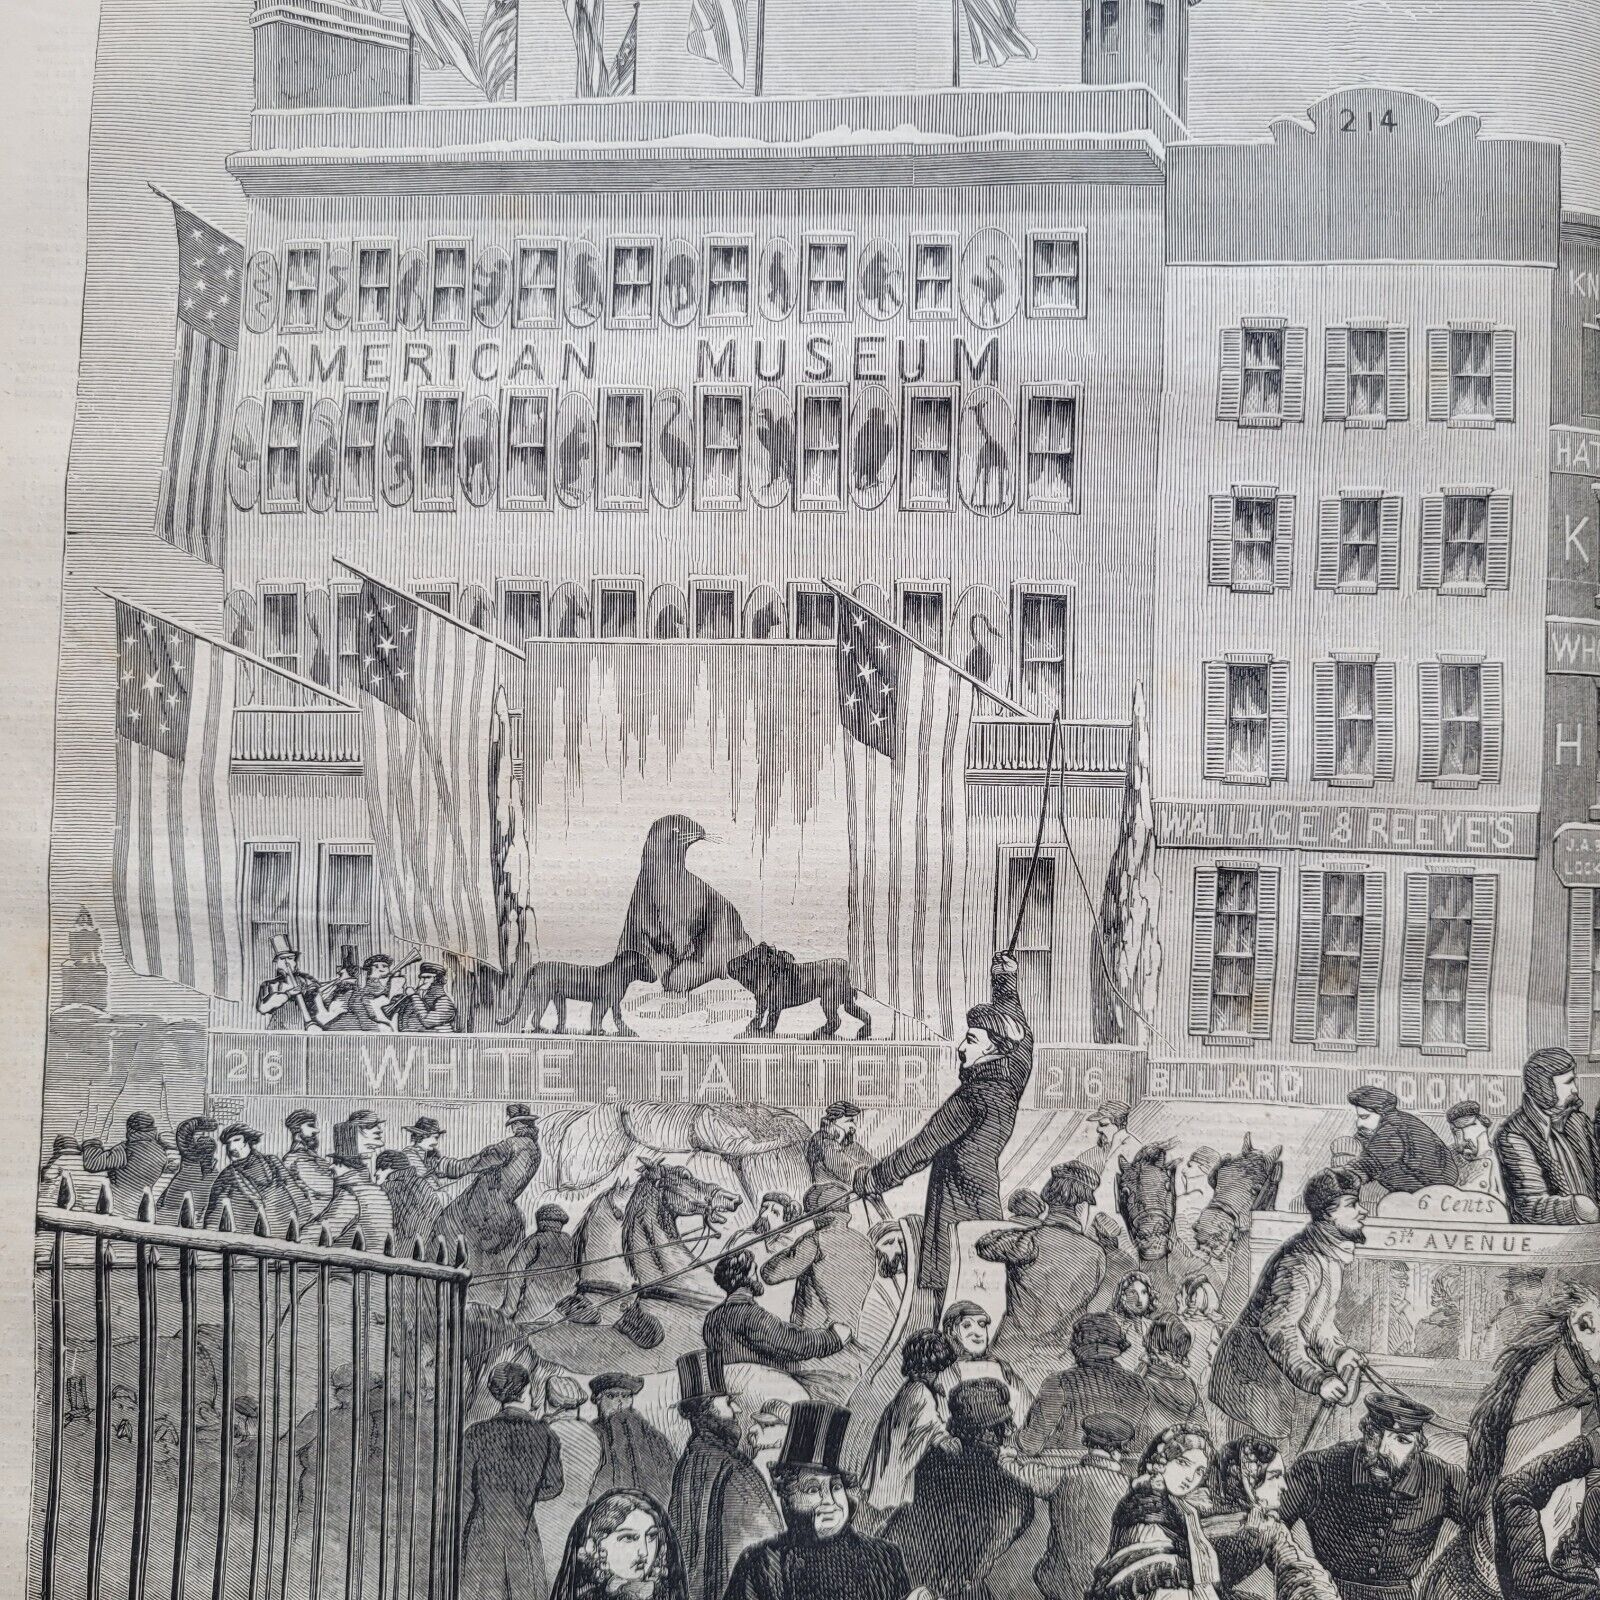 Harper's Weekly 2/18/1860  Broadway St. NYC  P.T. Barnum's American Museum